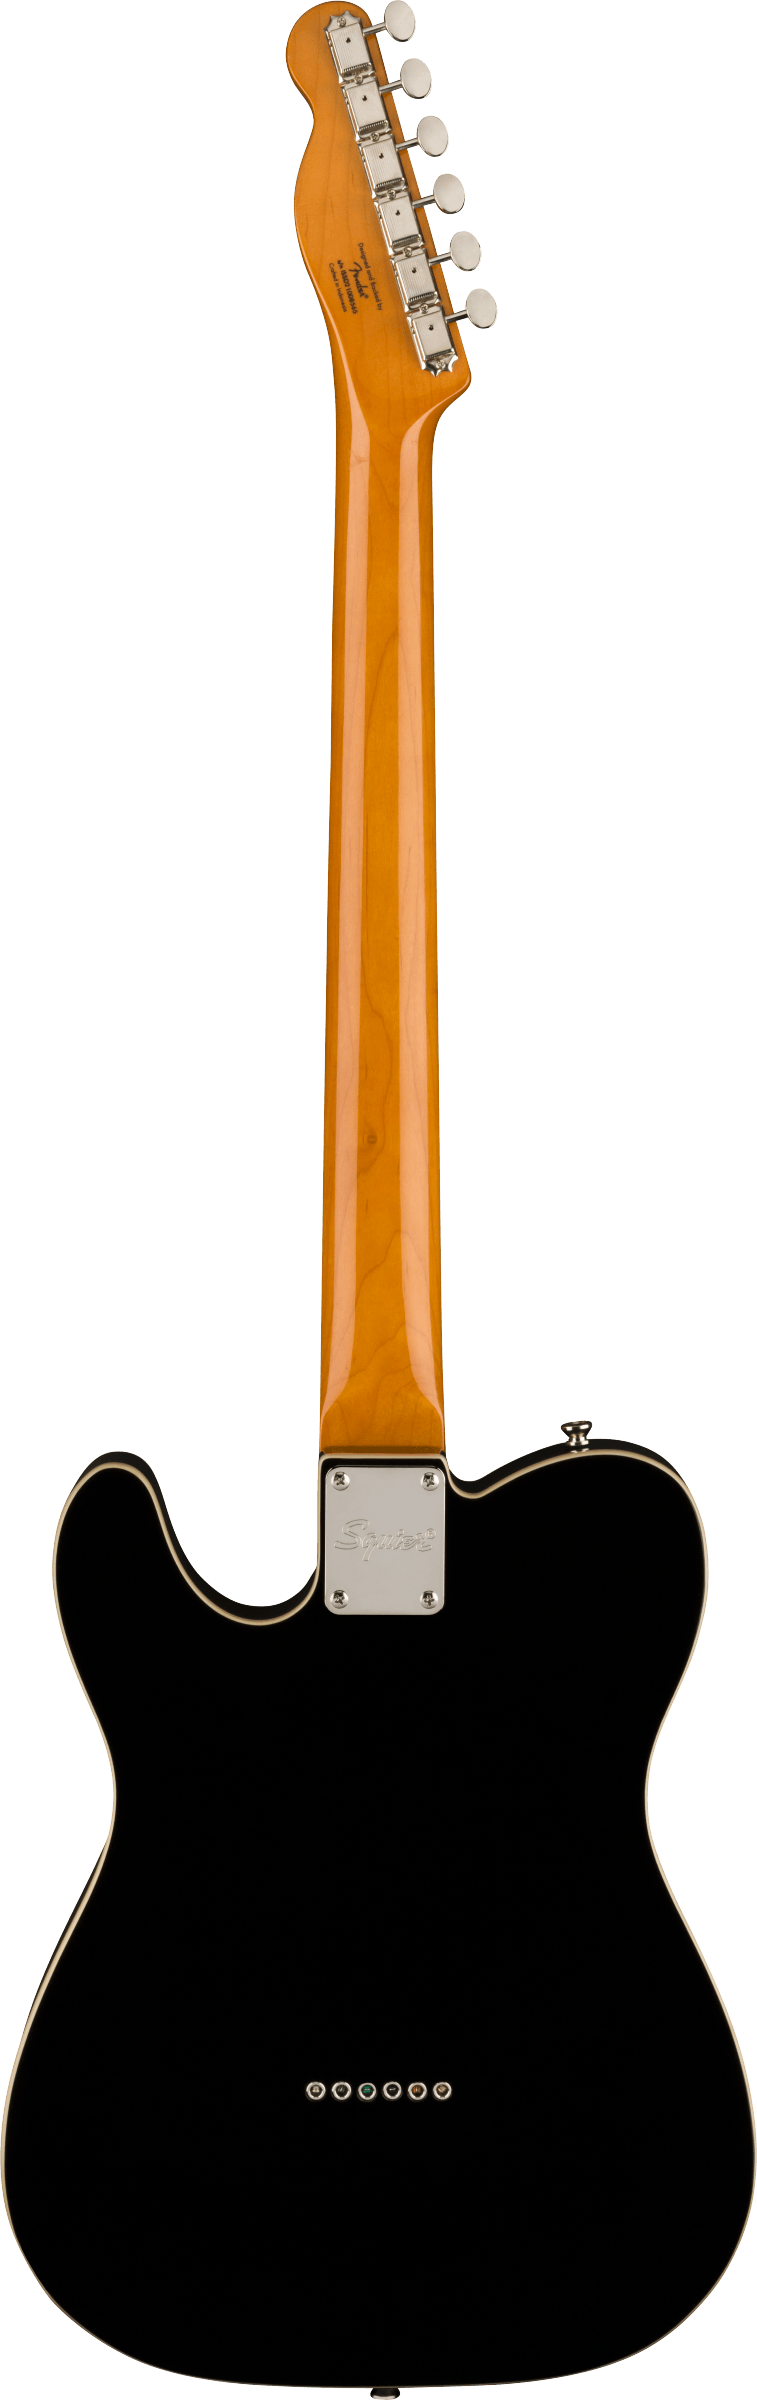 Squier Classic Vibe Baritone Custom Telecaster Electric Guitar in 